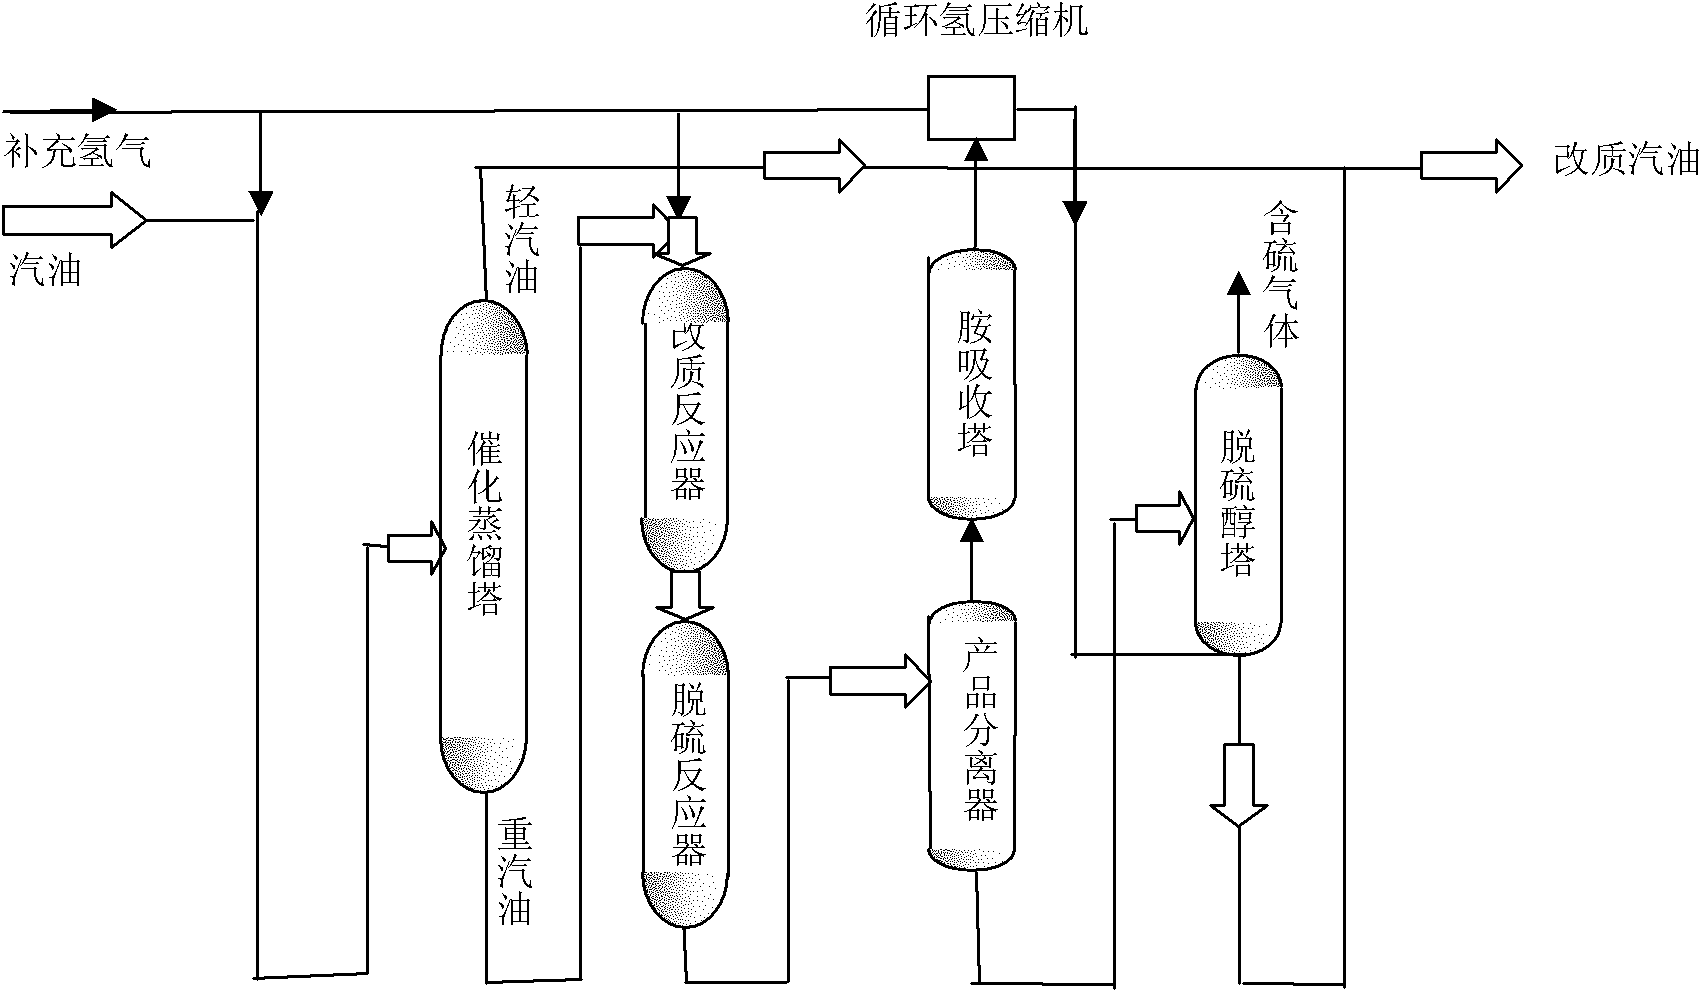 Method for gasoline hydrogenation modification